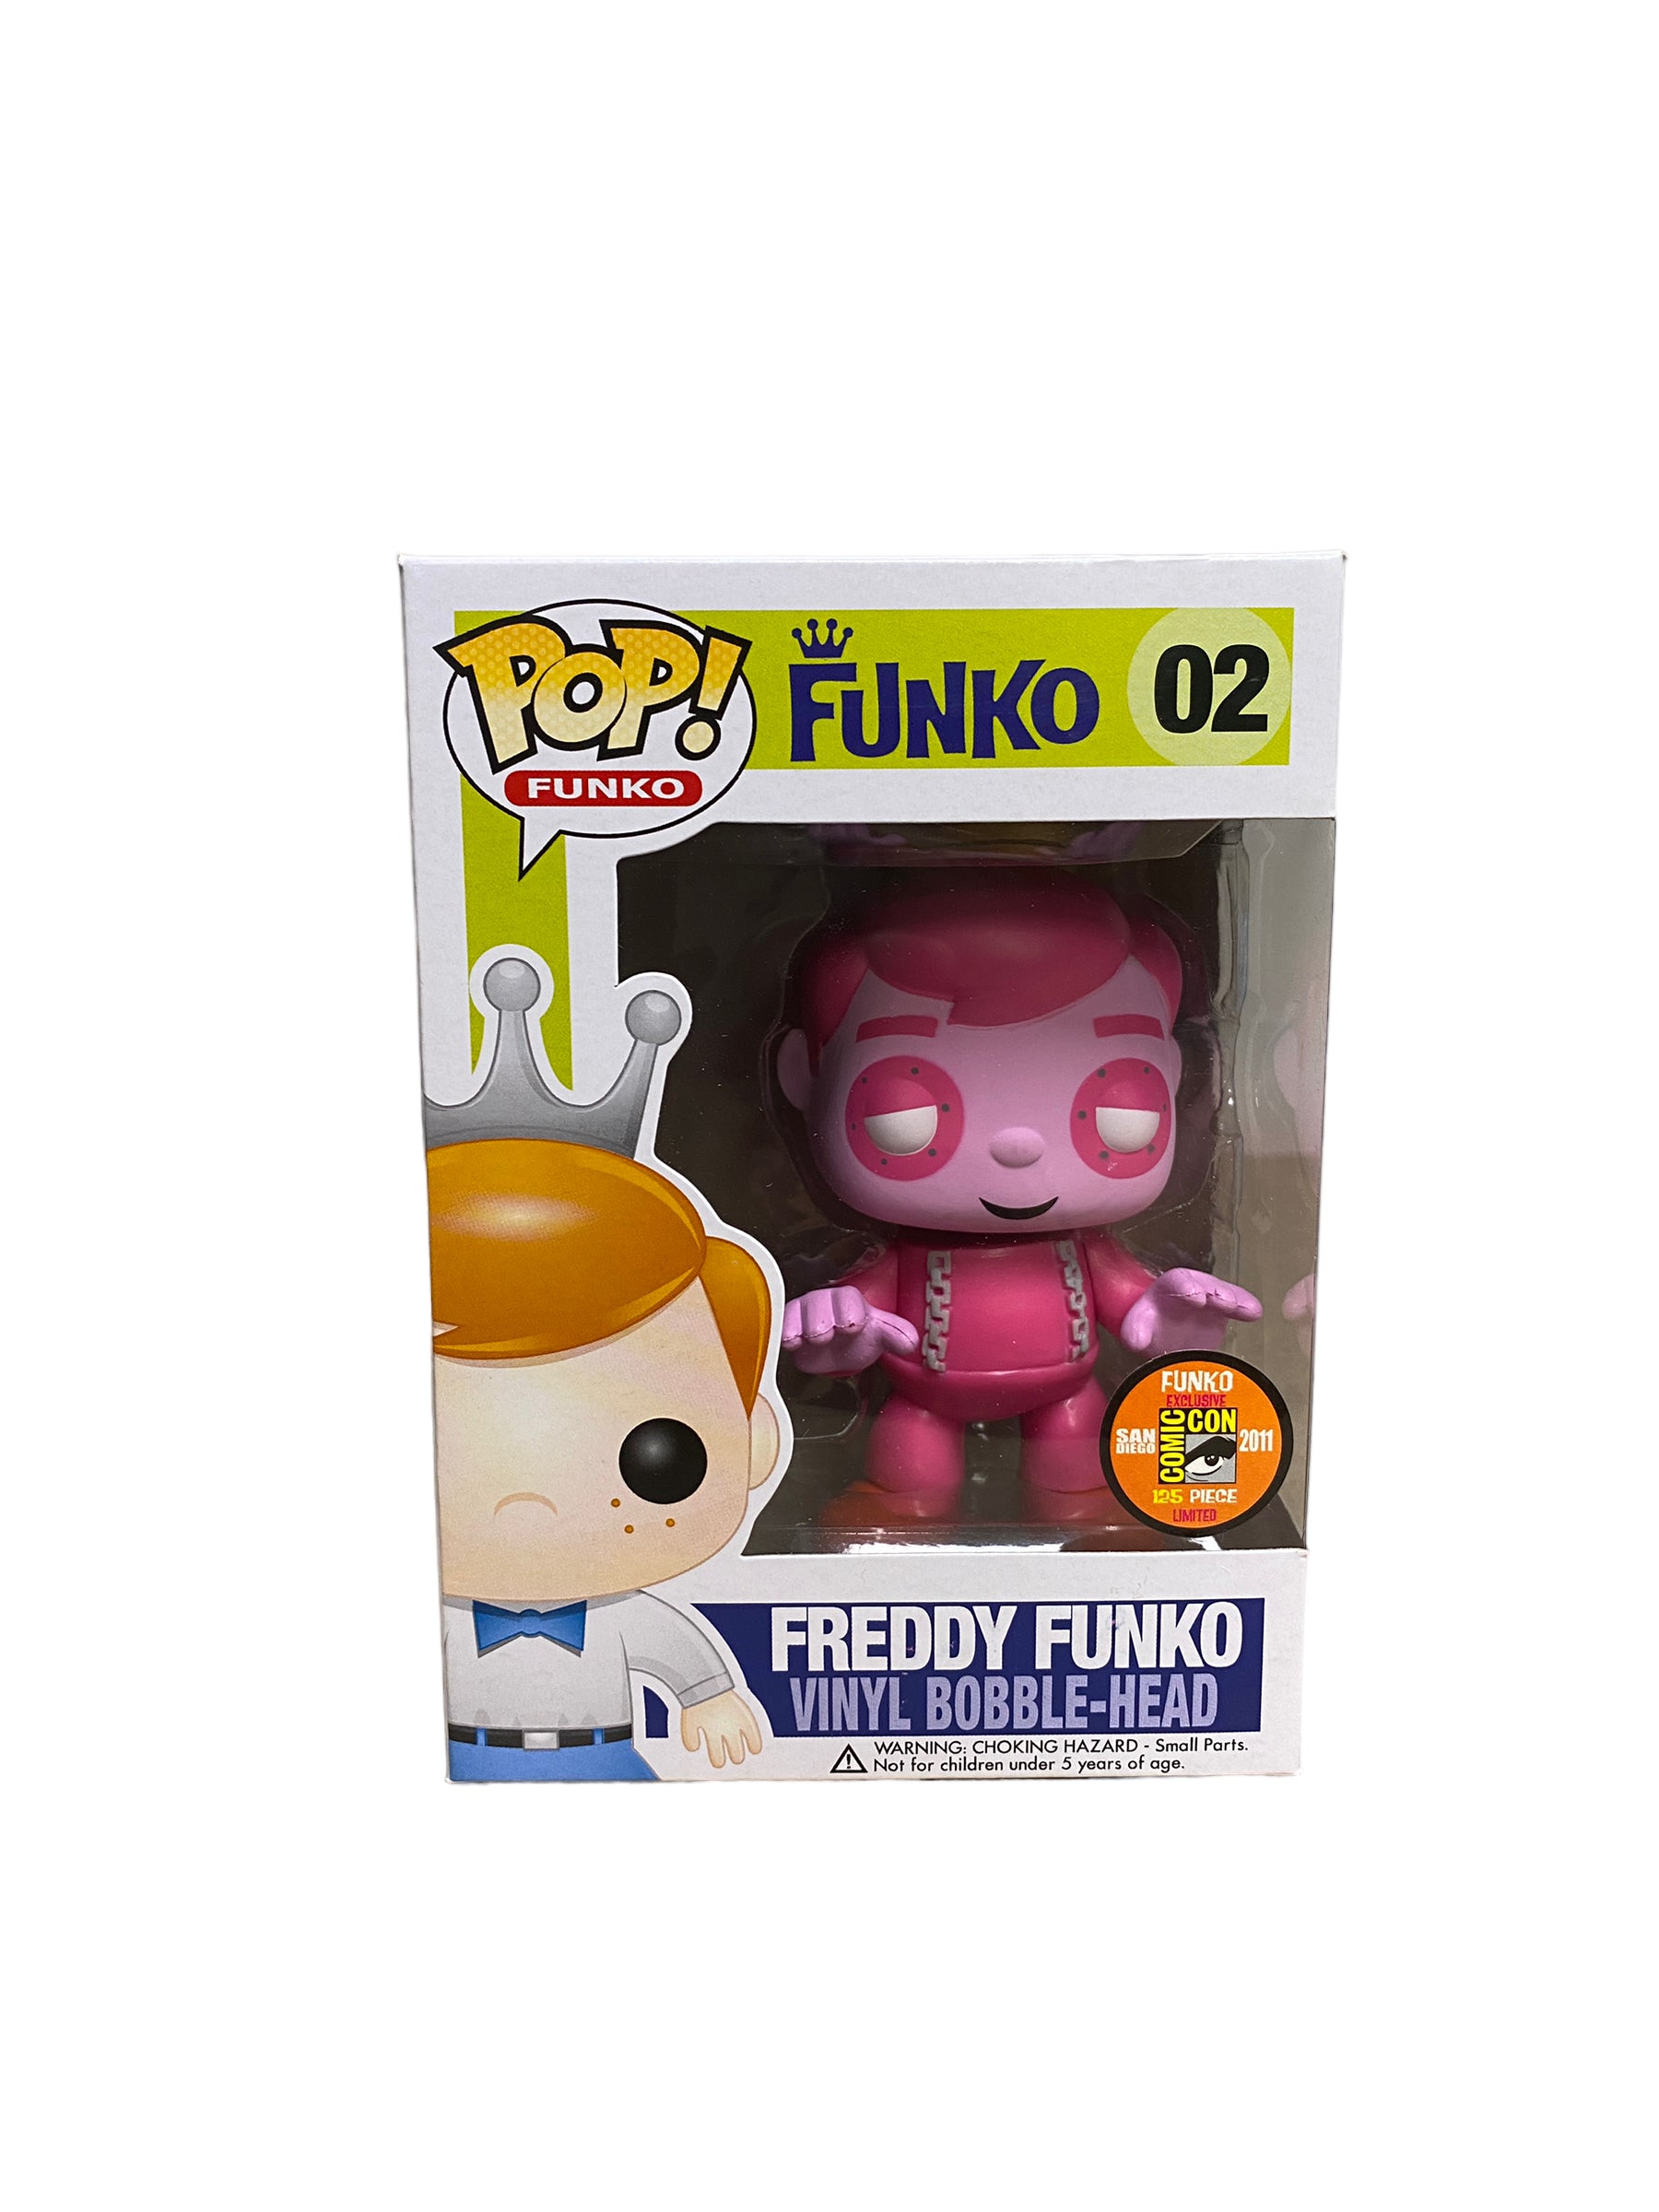 Freddy Funko as Franken Berry #02 Funko Pop! - SDCC 2011 Exclusive LE125 Pieces - Condition 8/10